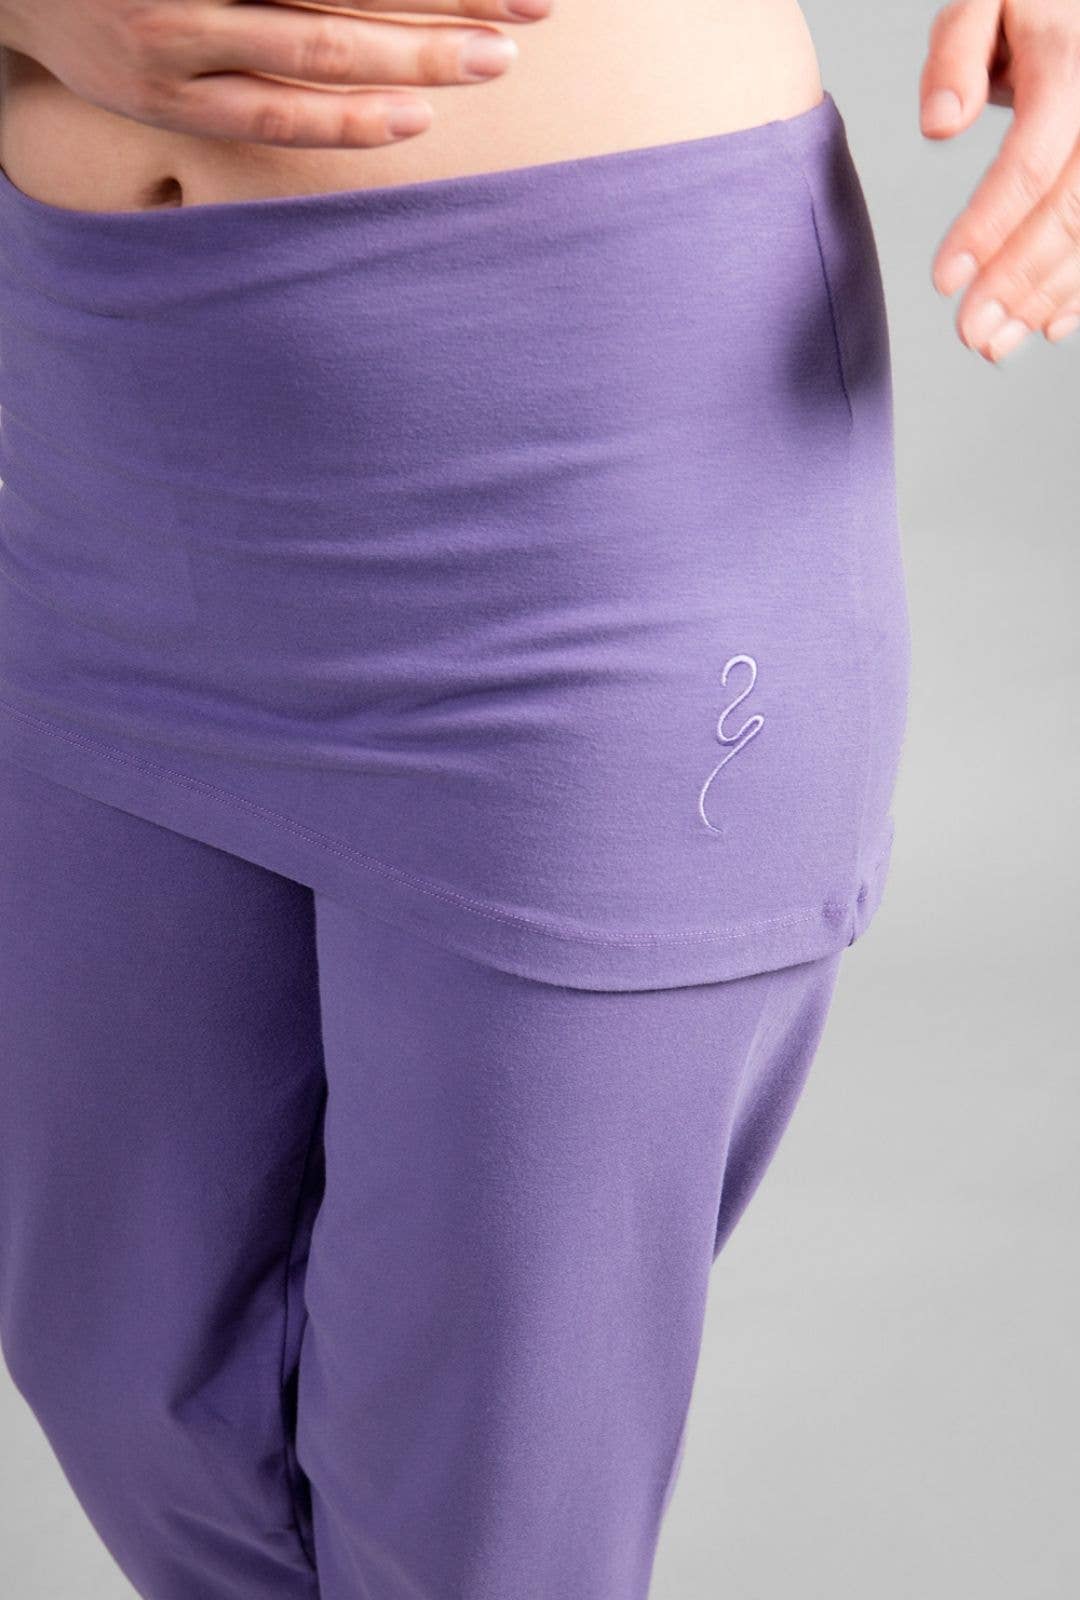 Sohang Women's Yoga Pants - Lilac